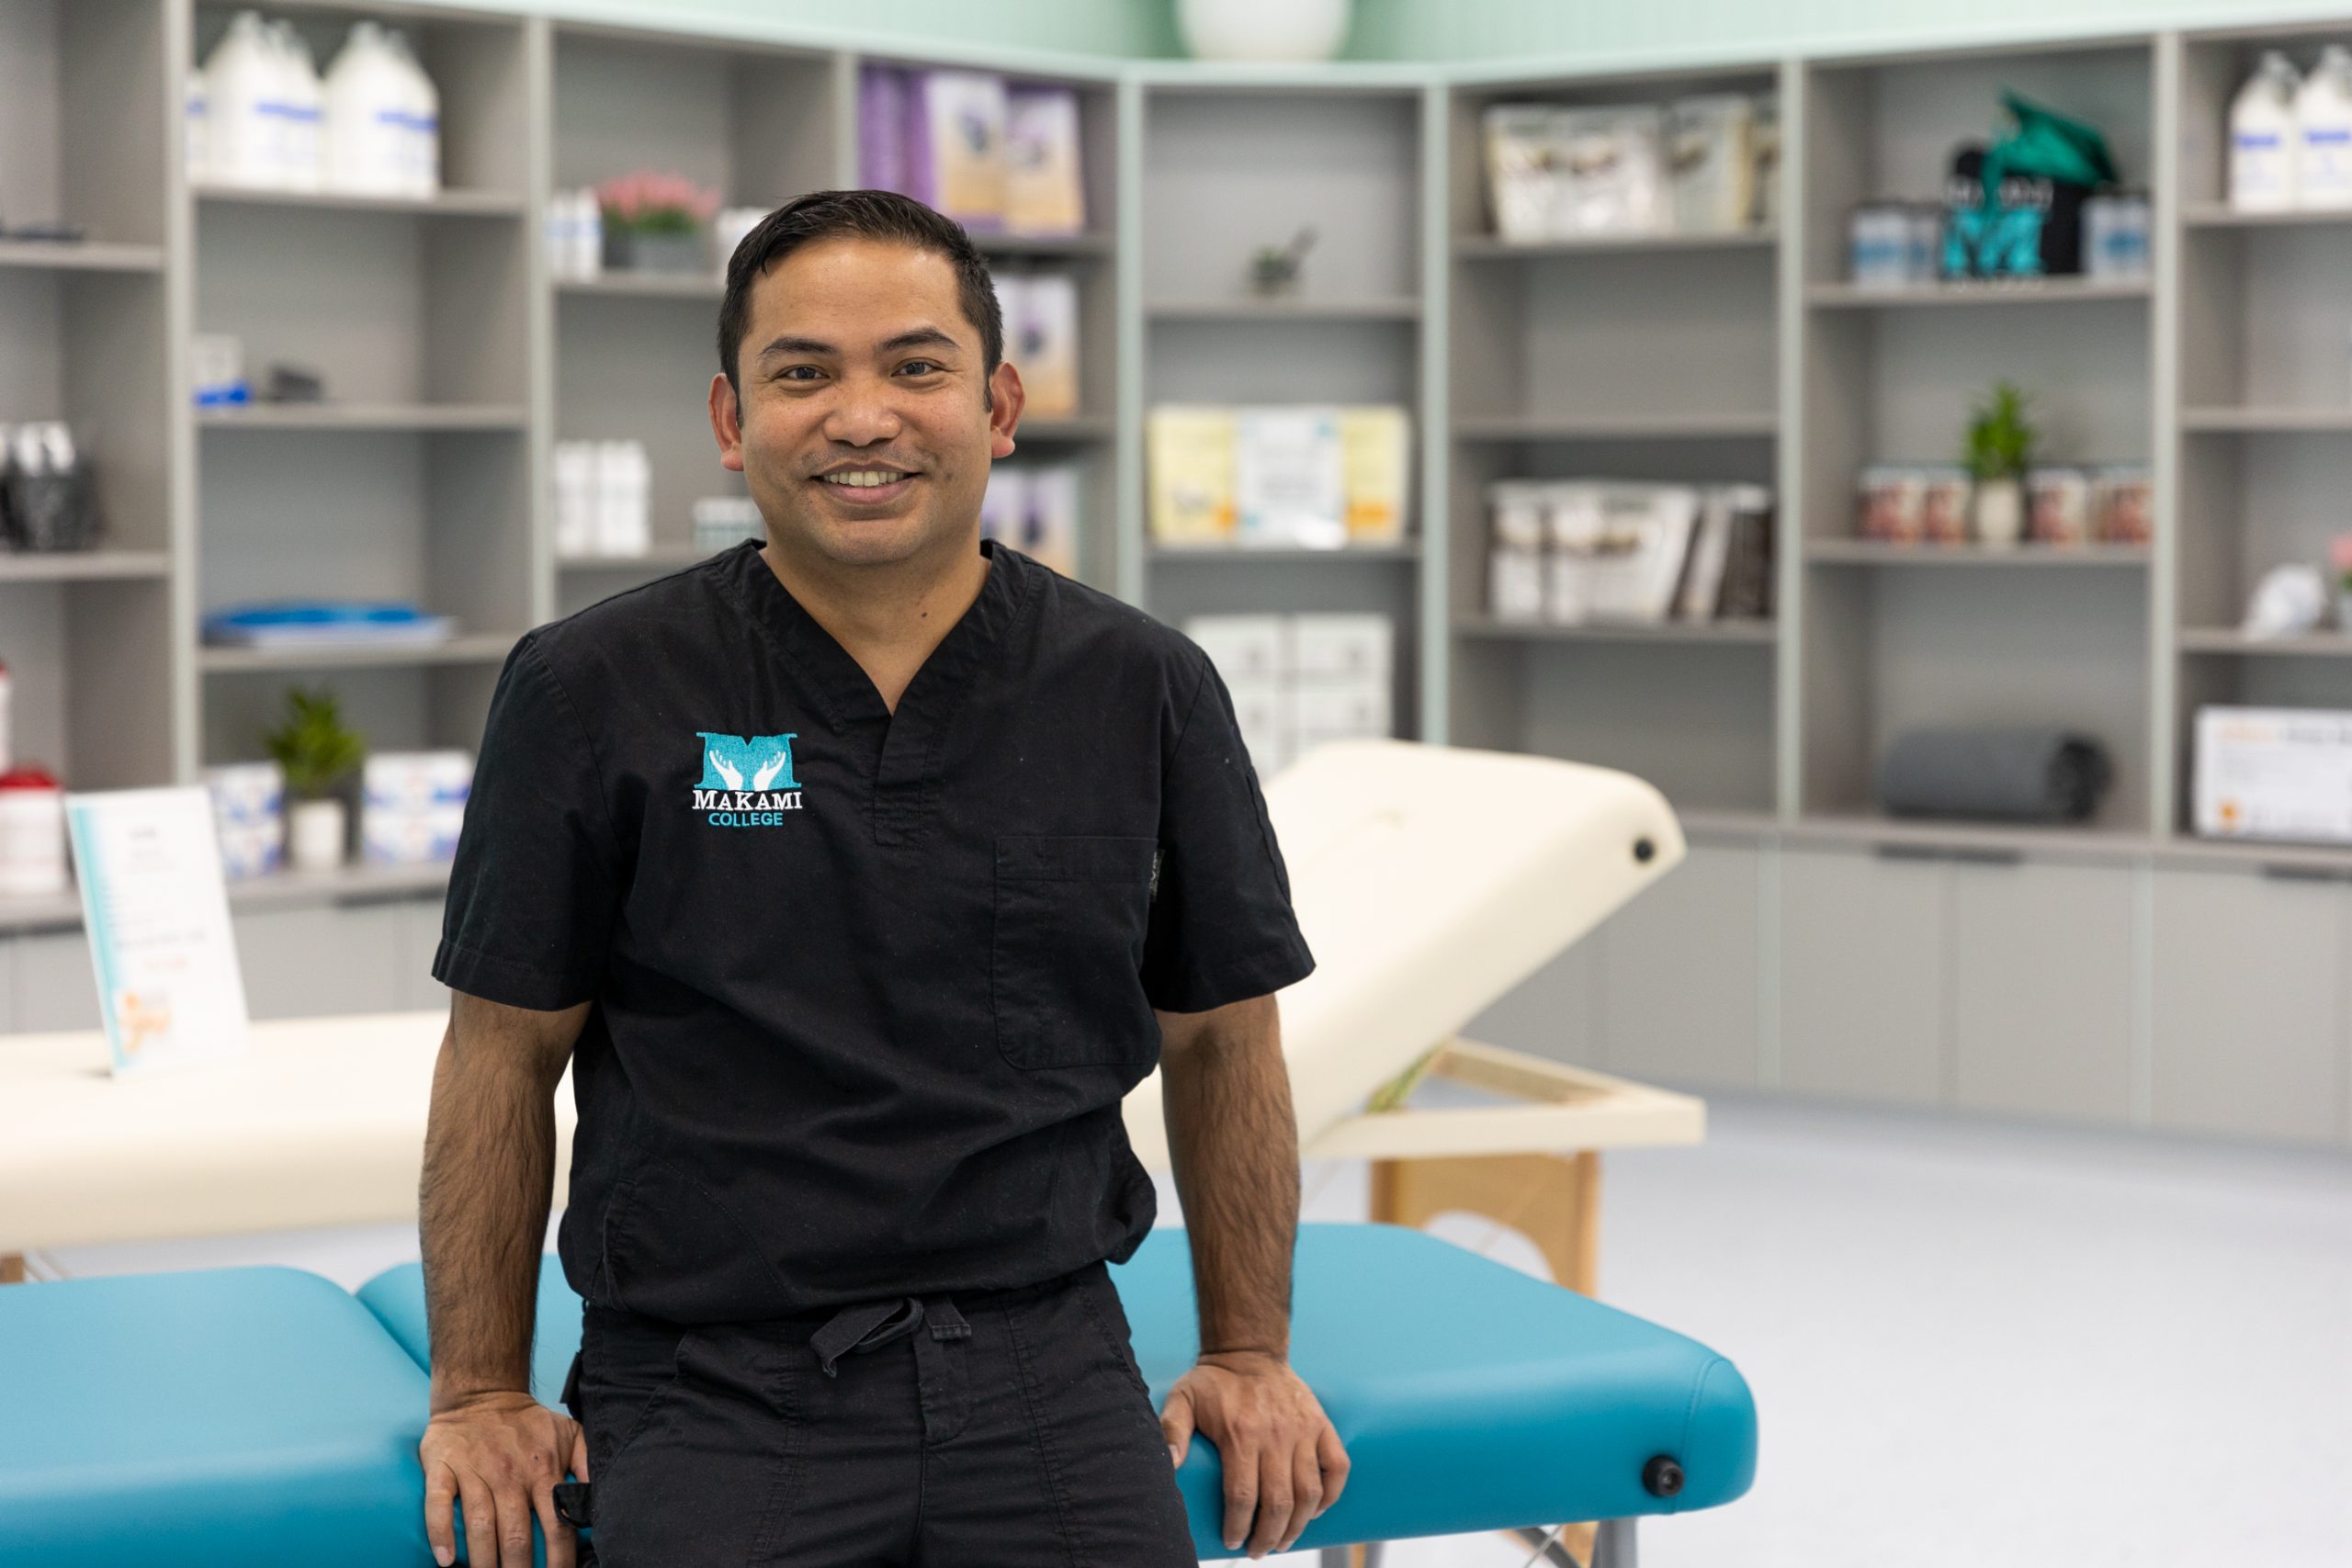 Samual, an international massage therapy graduate of MaKami College turned entreprepreneur